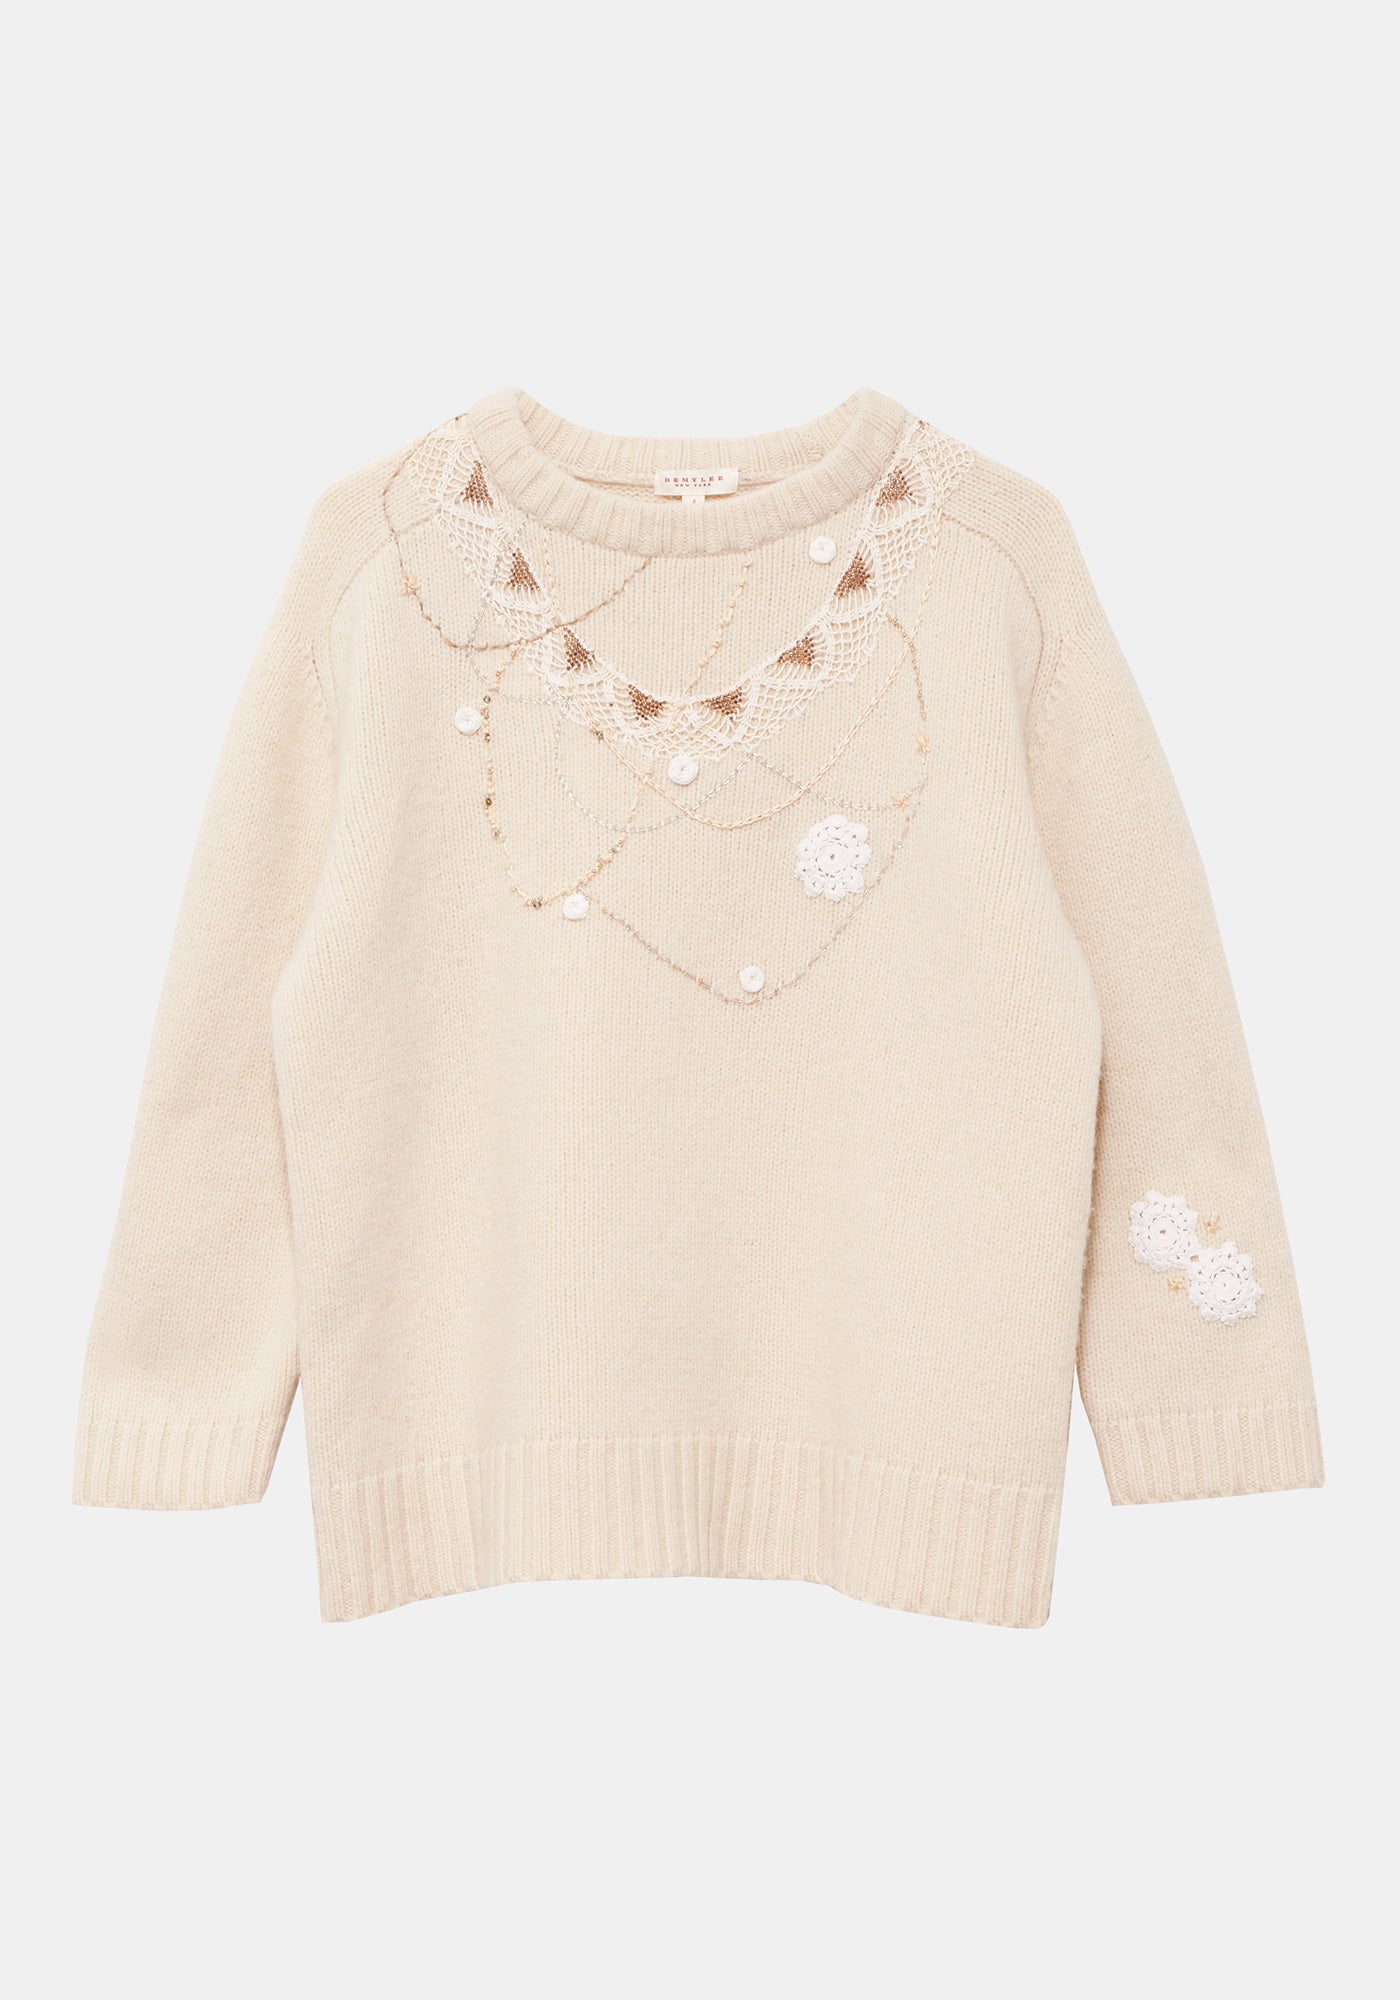 Natural Farah Sweater, Small - Beaded Lace